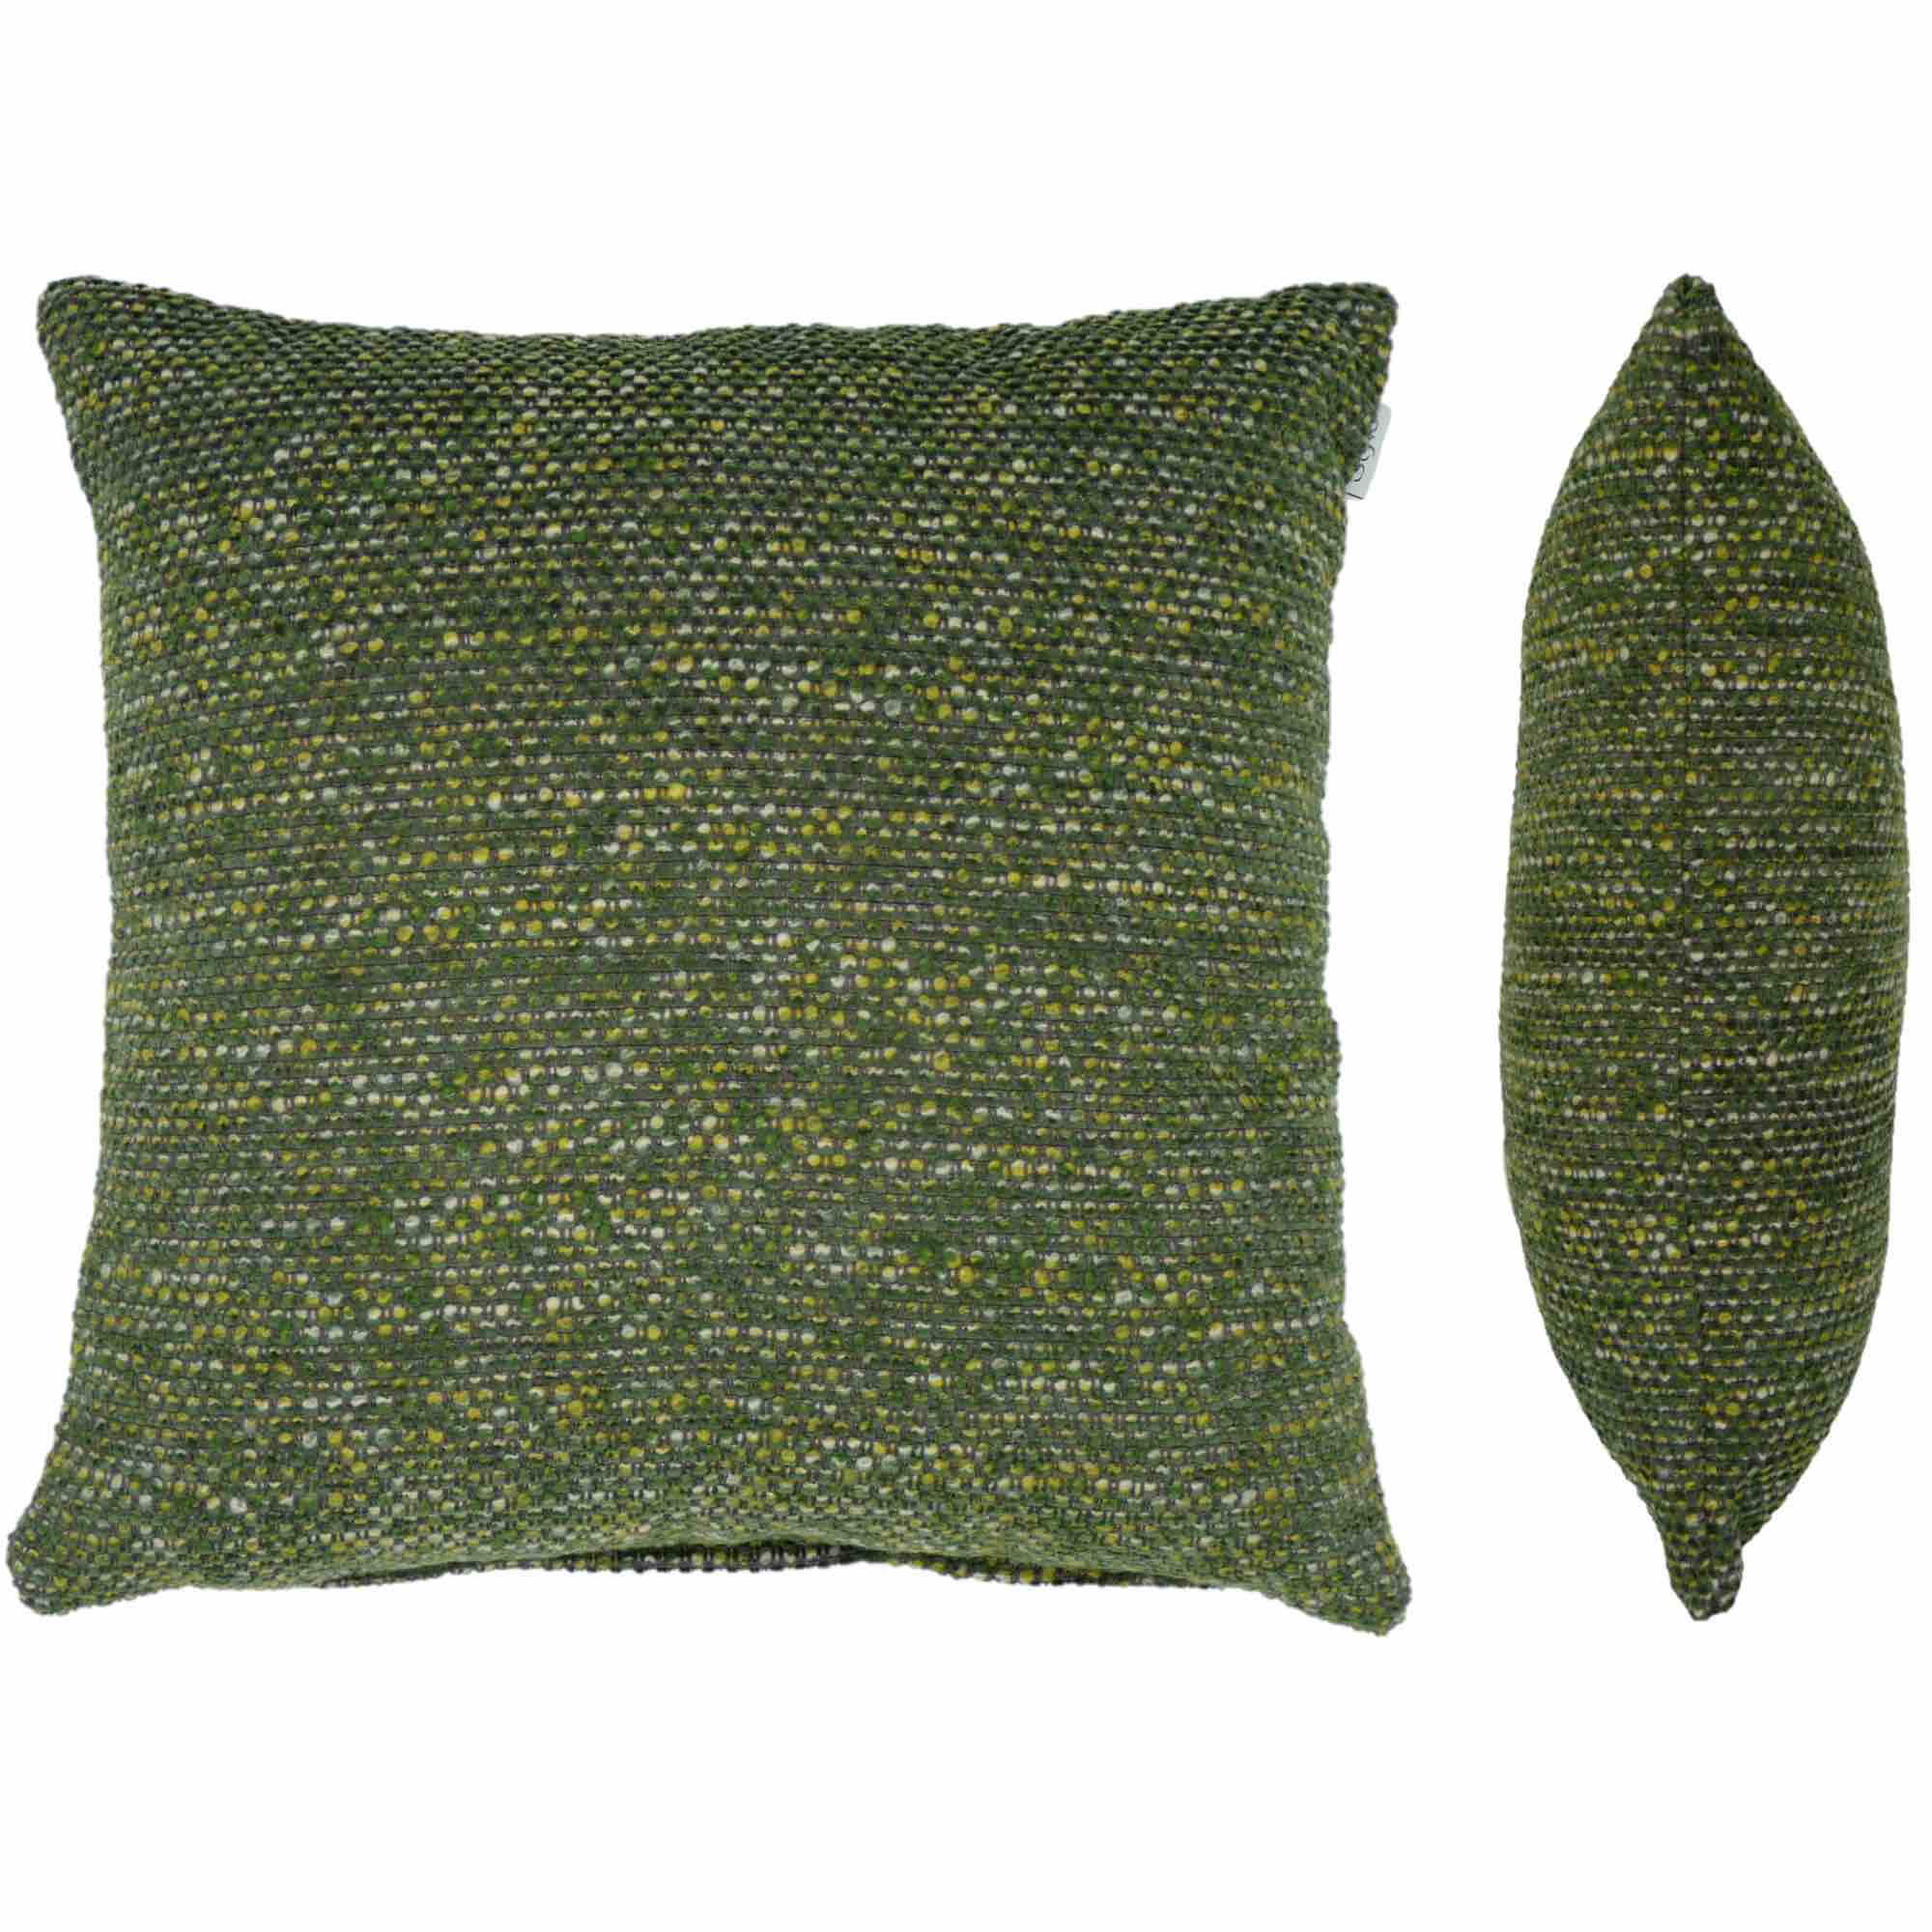 Elgin Woven Cushion Cover - Amazon